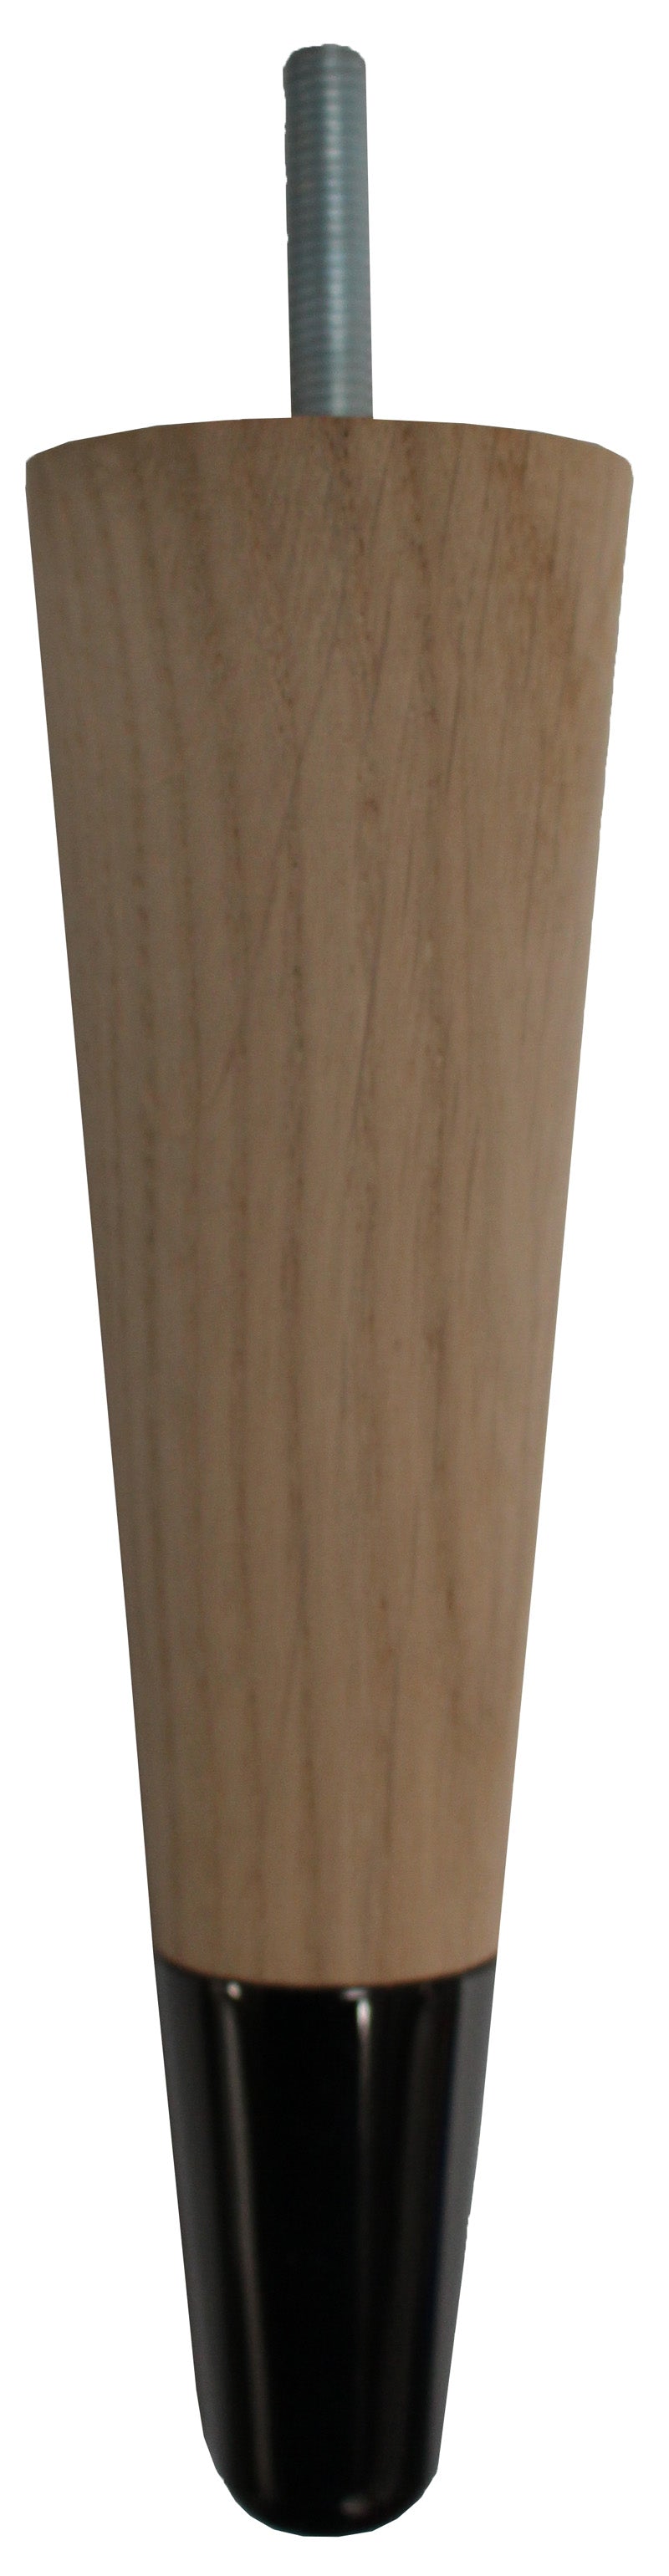 Carin Solid Oak Tapered Furniture Legs - Raw Finish - Black Chrome Slipper Cups - Set of 4